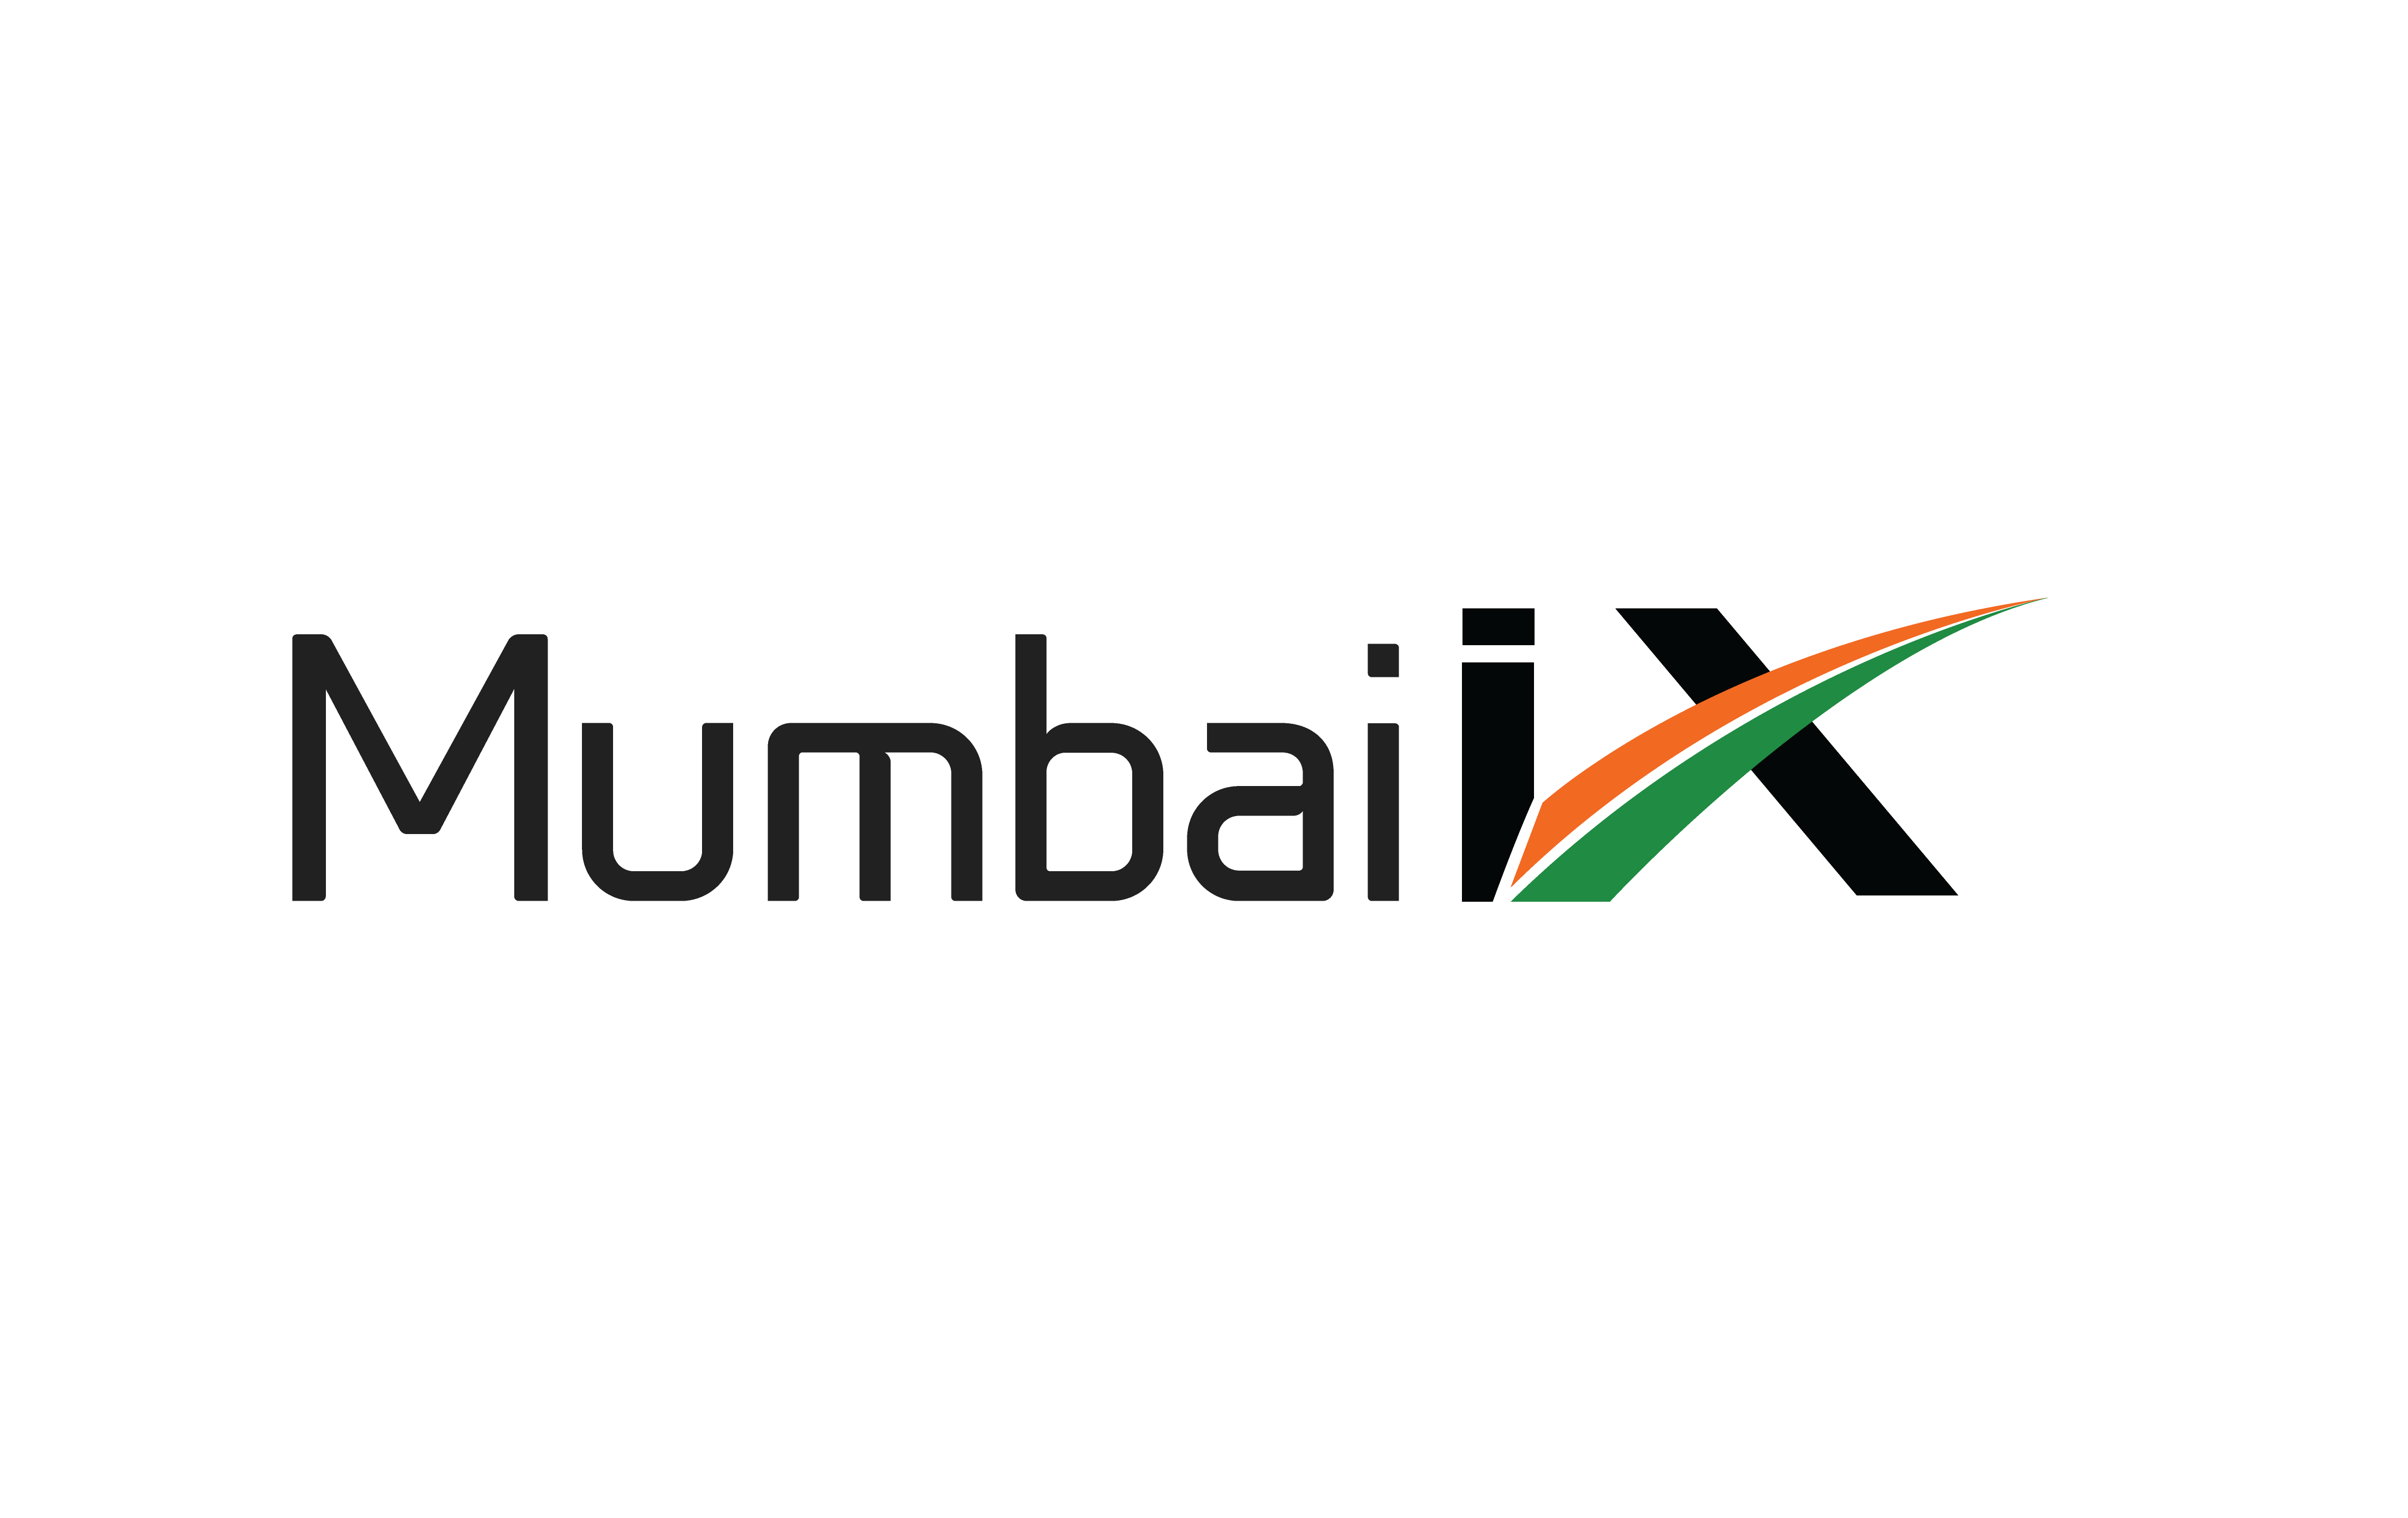 IX Logo - File:Mumbai IX Logo.png - Wikimedia Commons